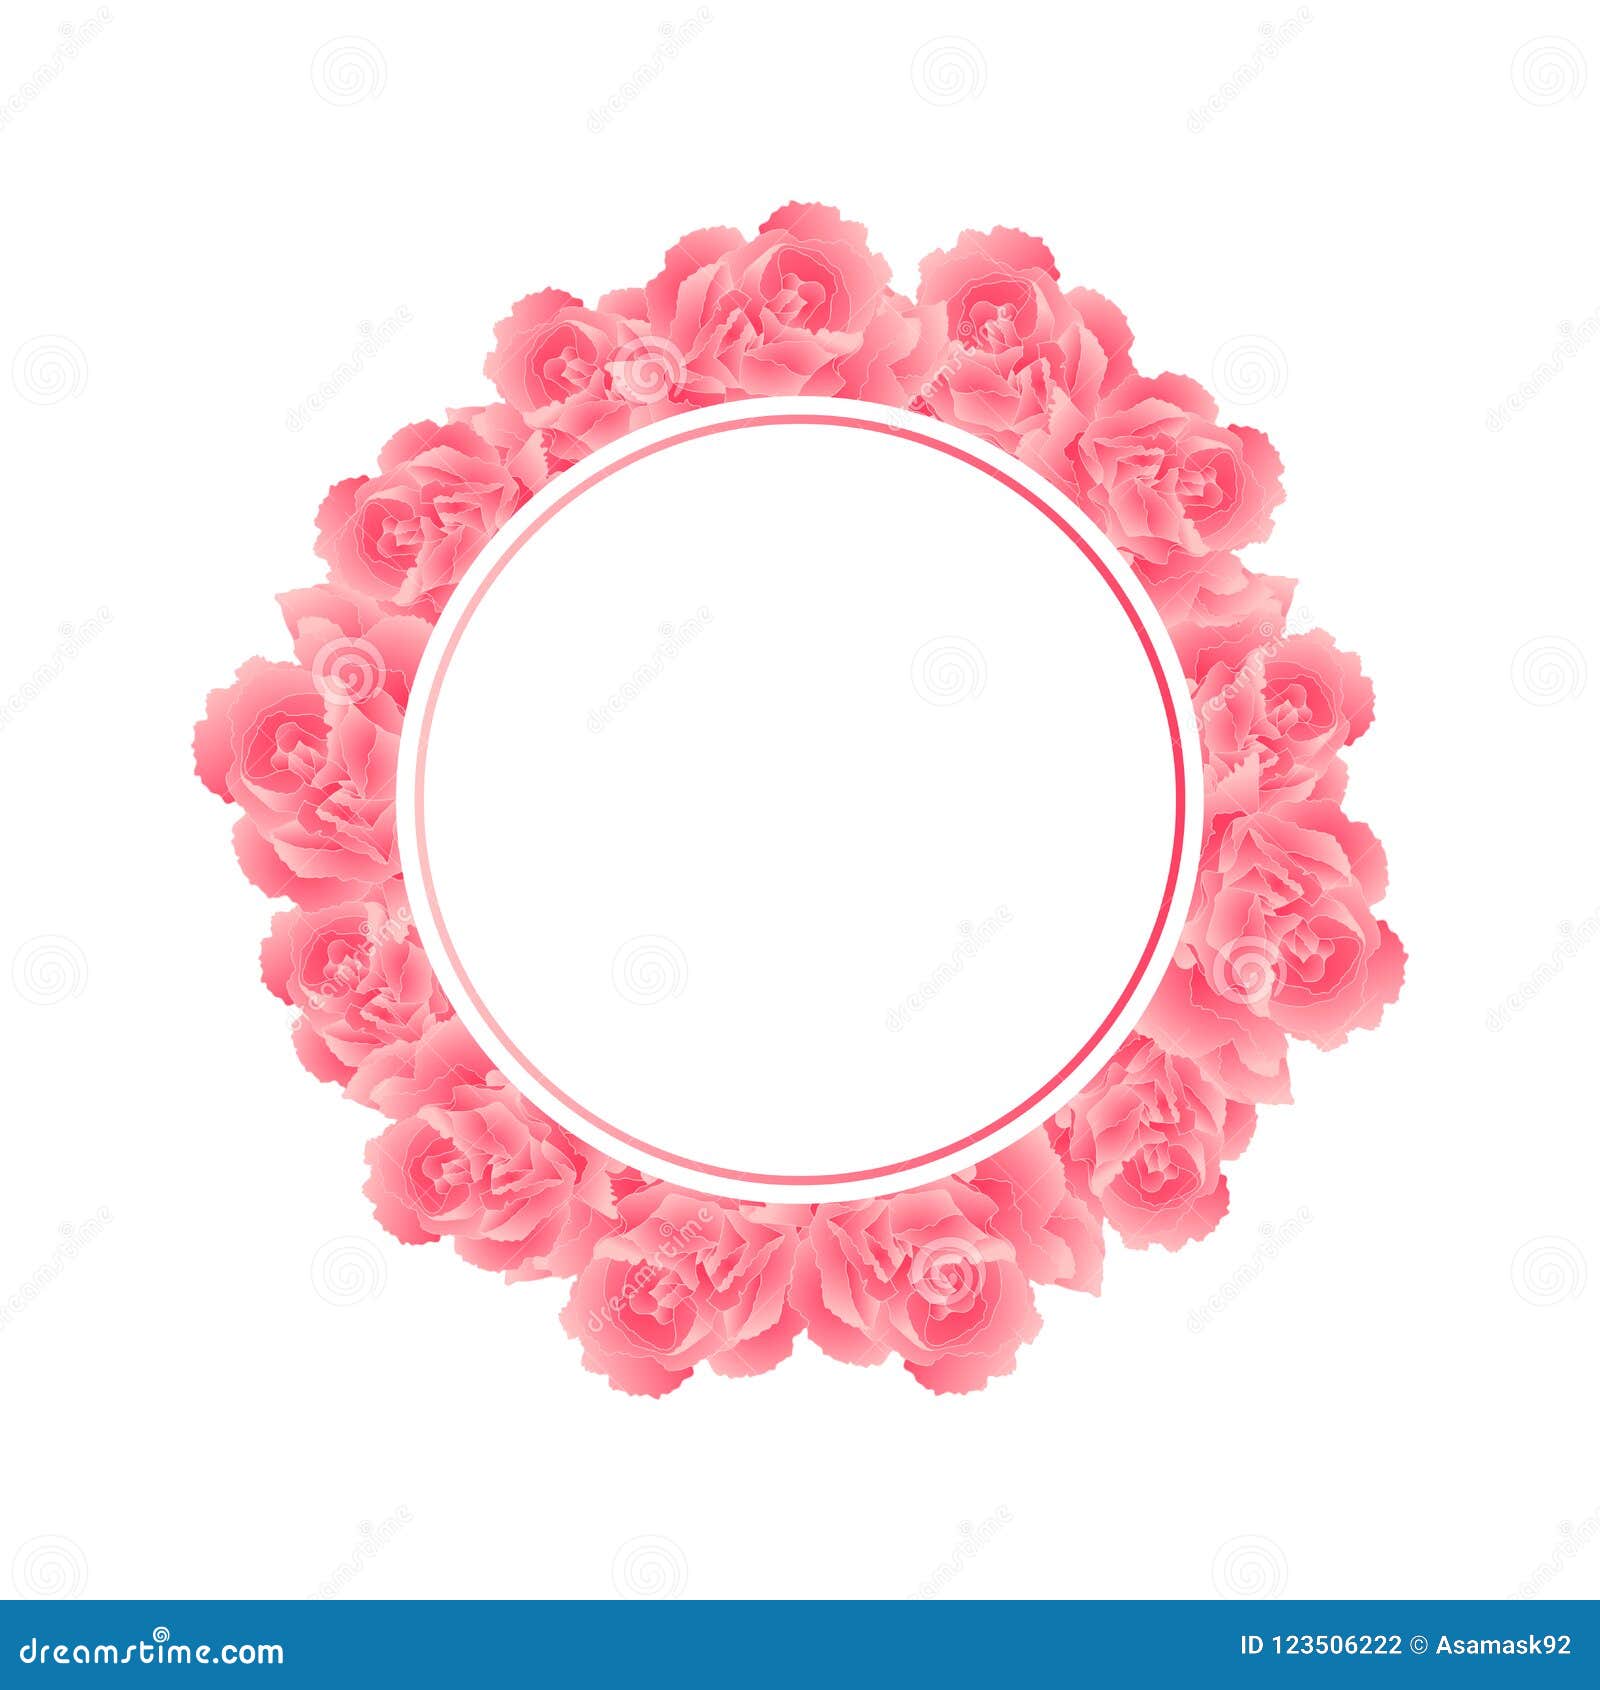 dianthus caryophyllus - pink carnation flower banner wreath.  